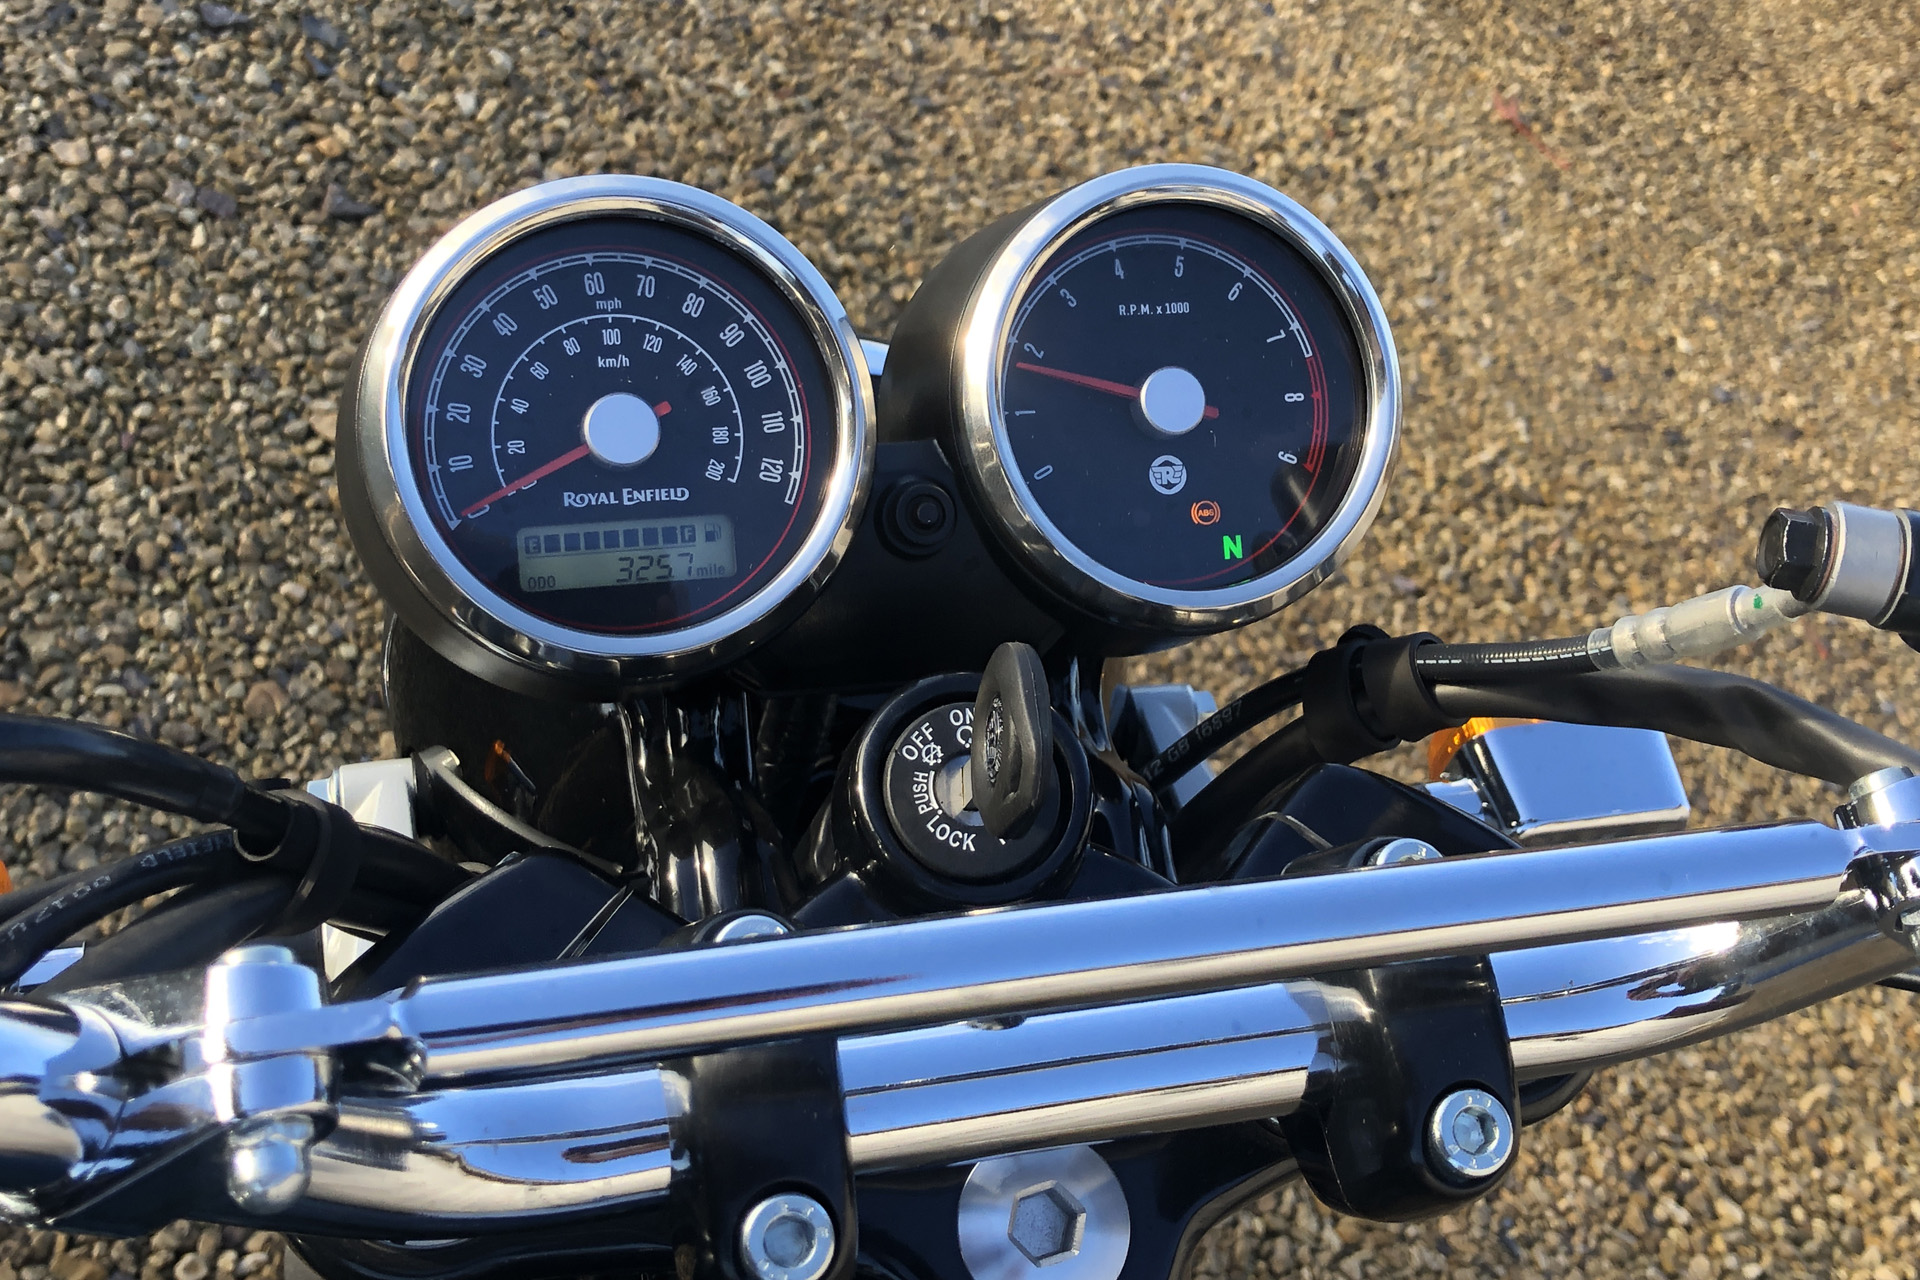 The speedometer on the Royal Enfield Interceptor